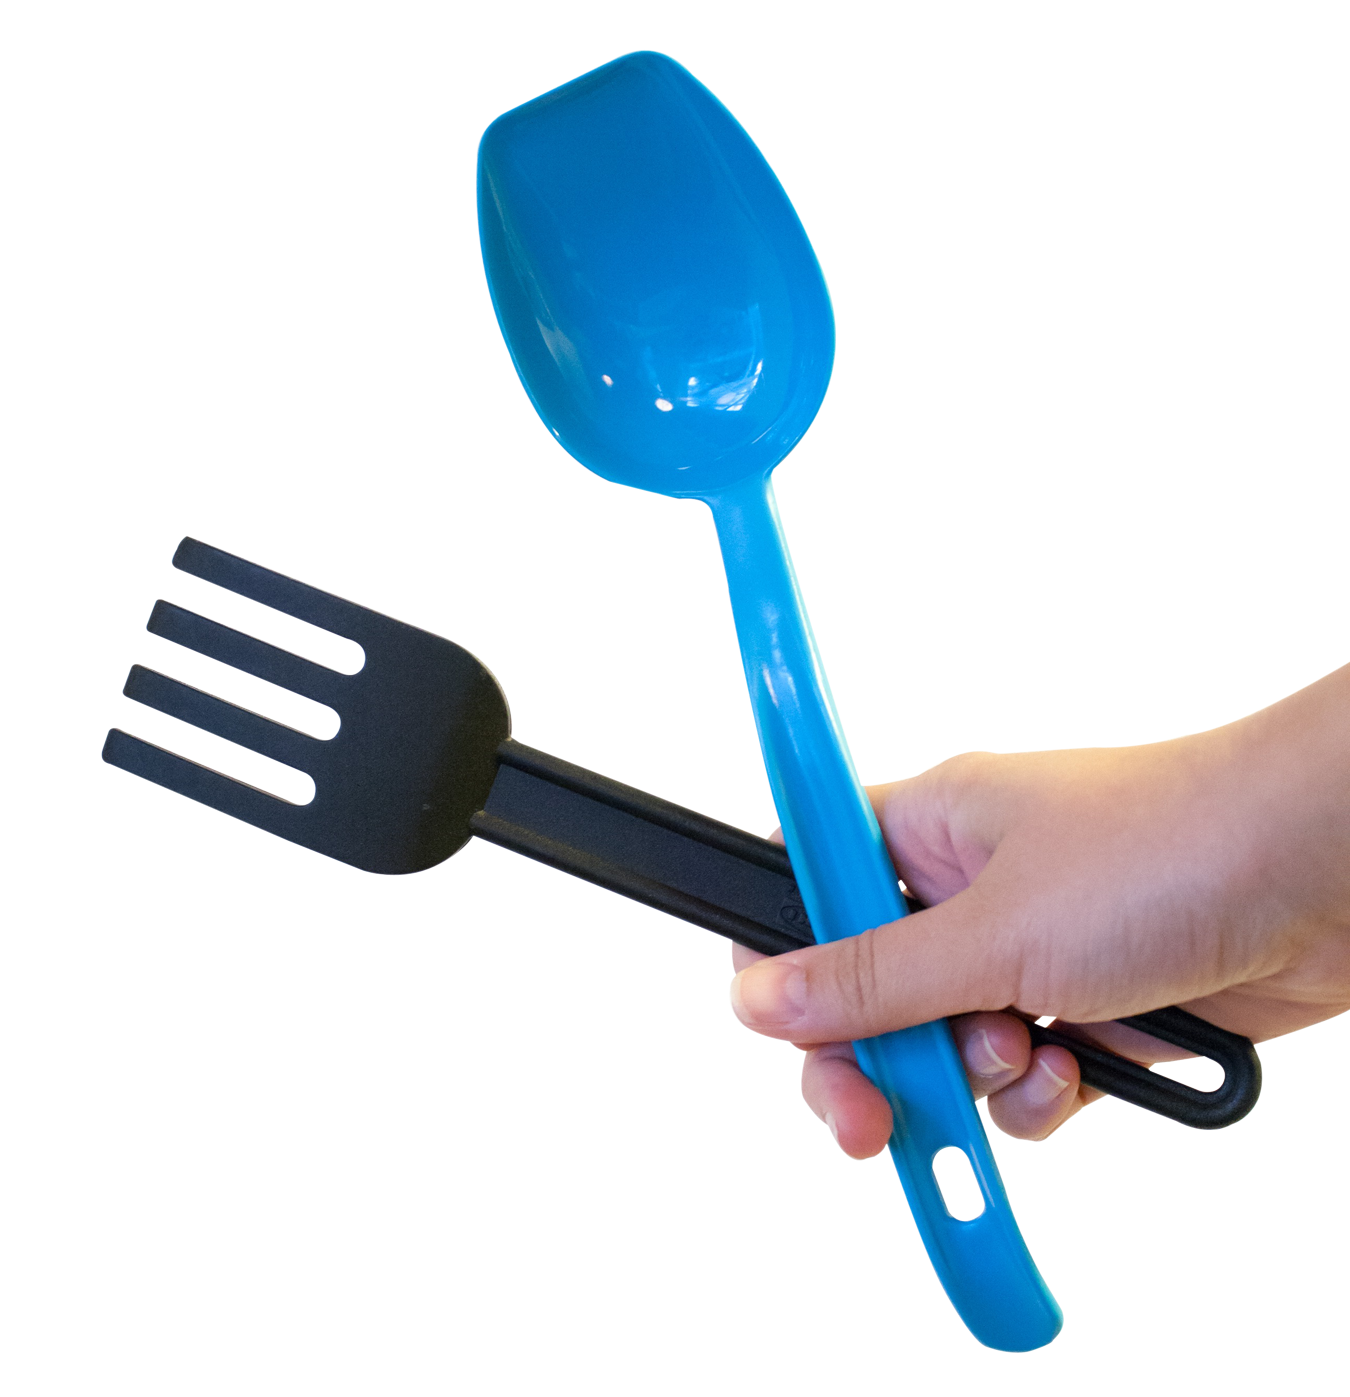 fork clipart hand holding